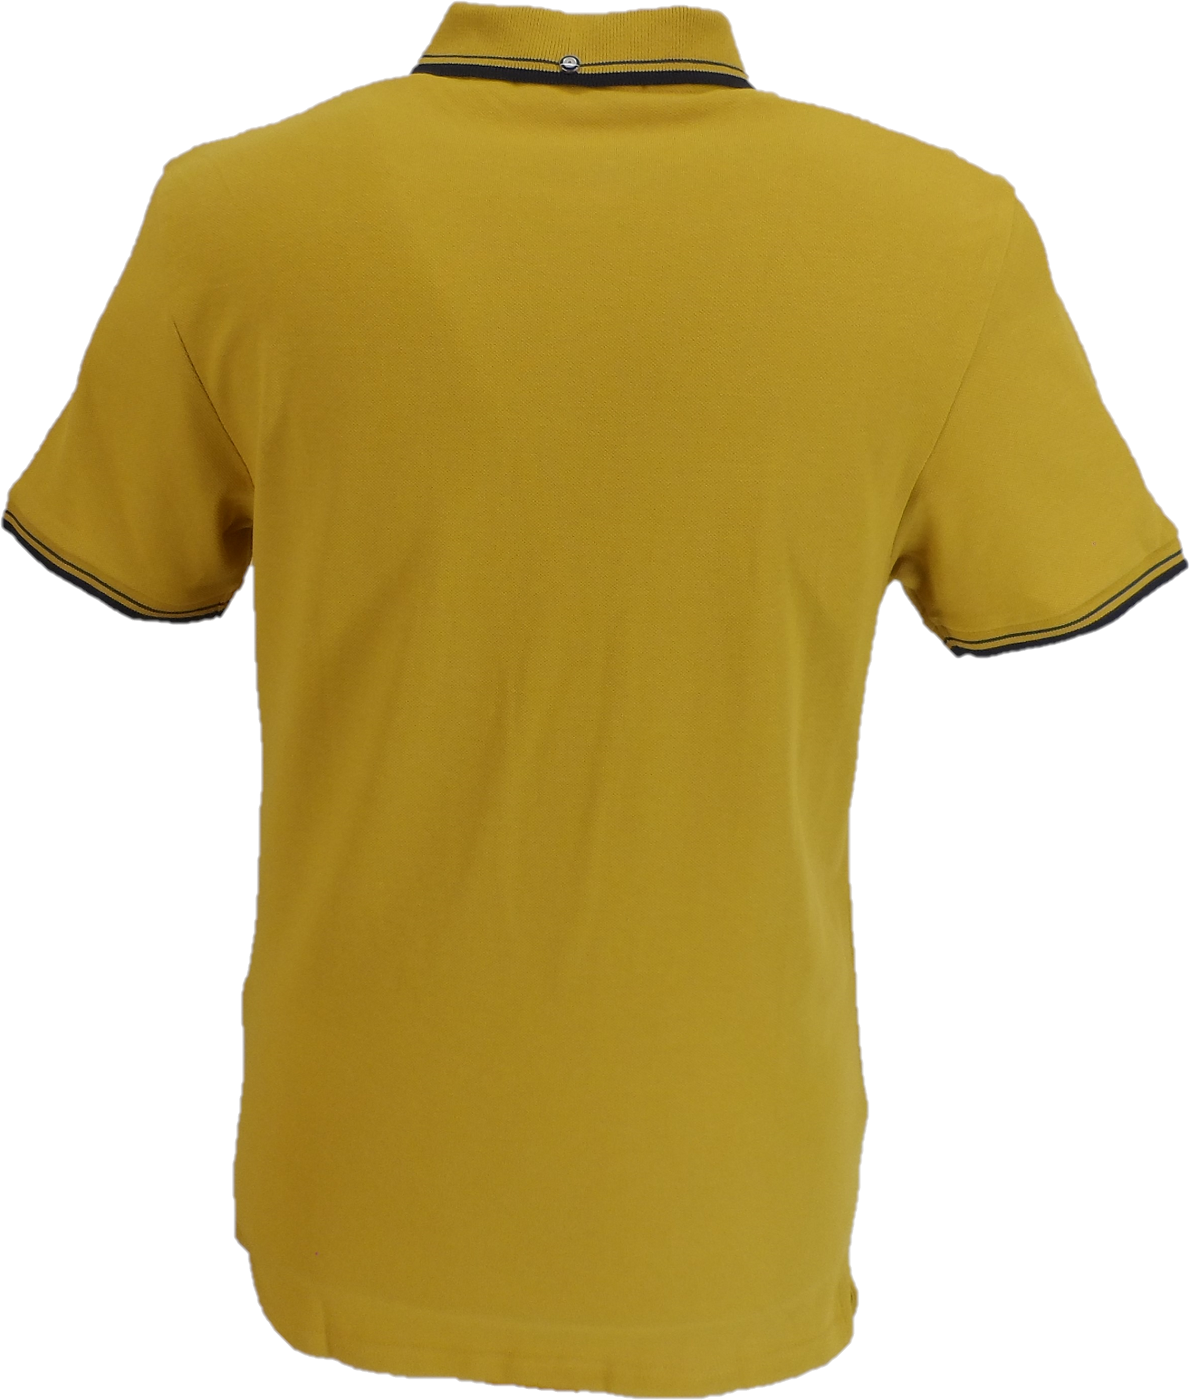 Ben Sherman Men's Signature Gold 100% Cotton Polo Shirt